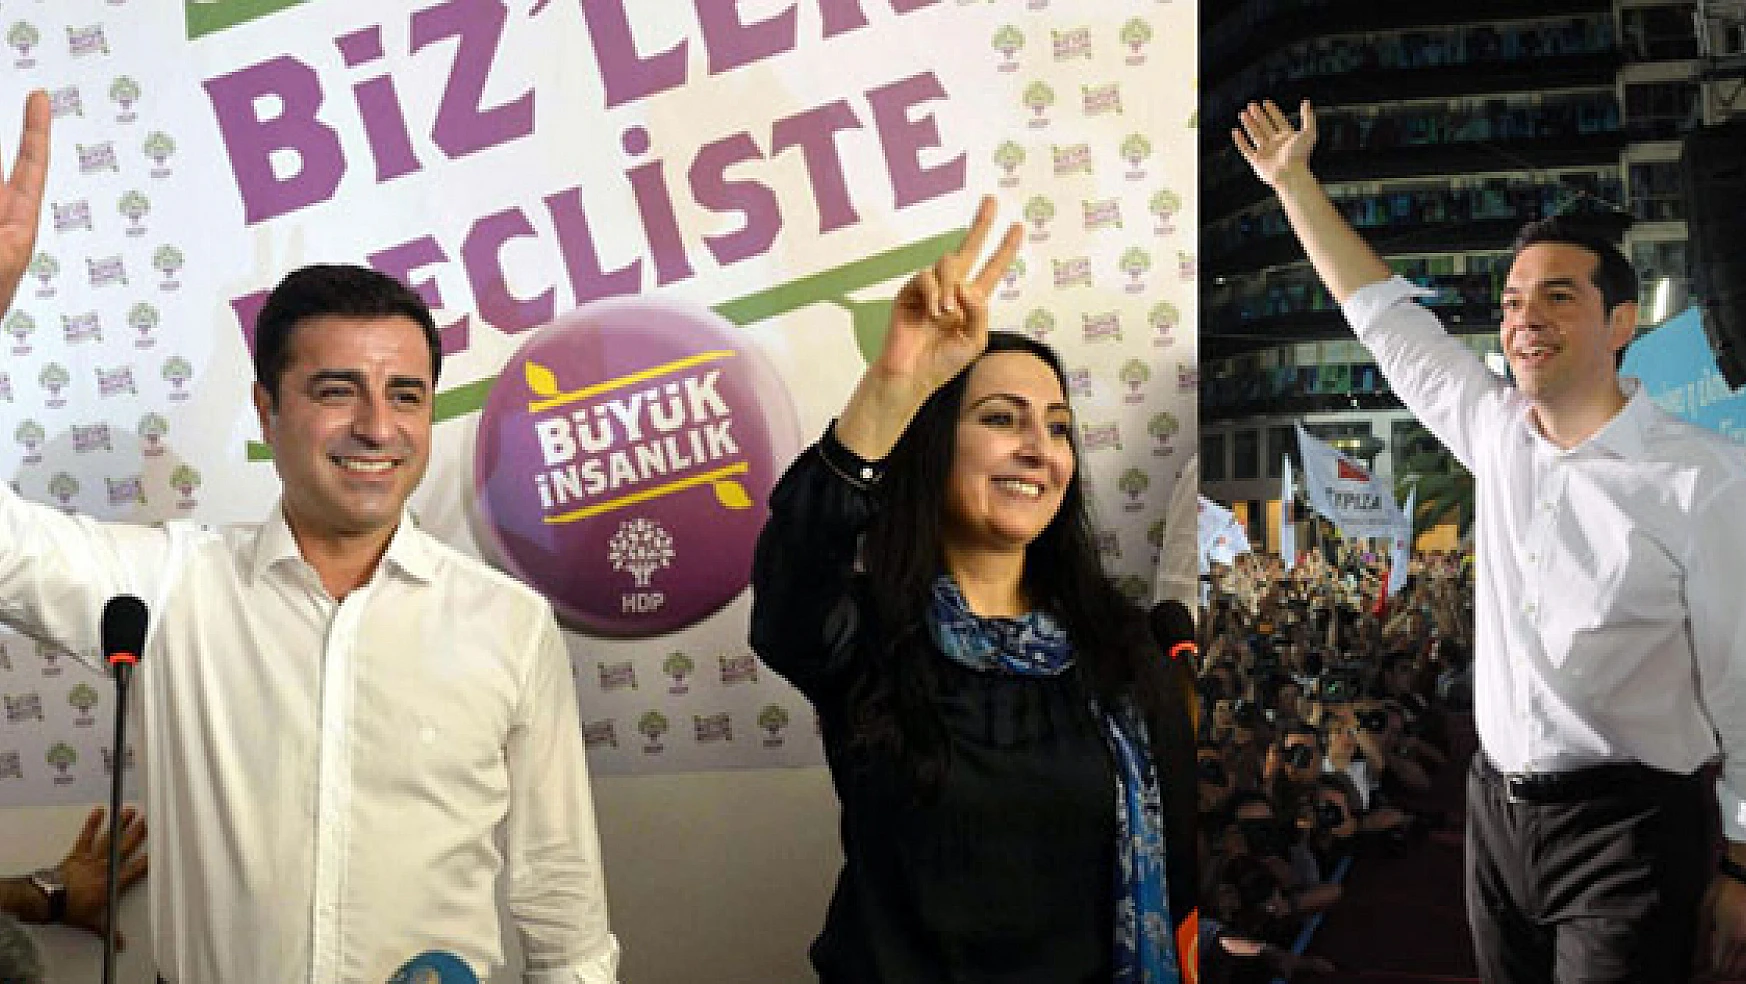 SYRİZA: HDPnin Büyük Başarısını Kutluyoruz